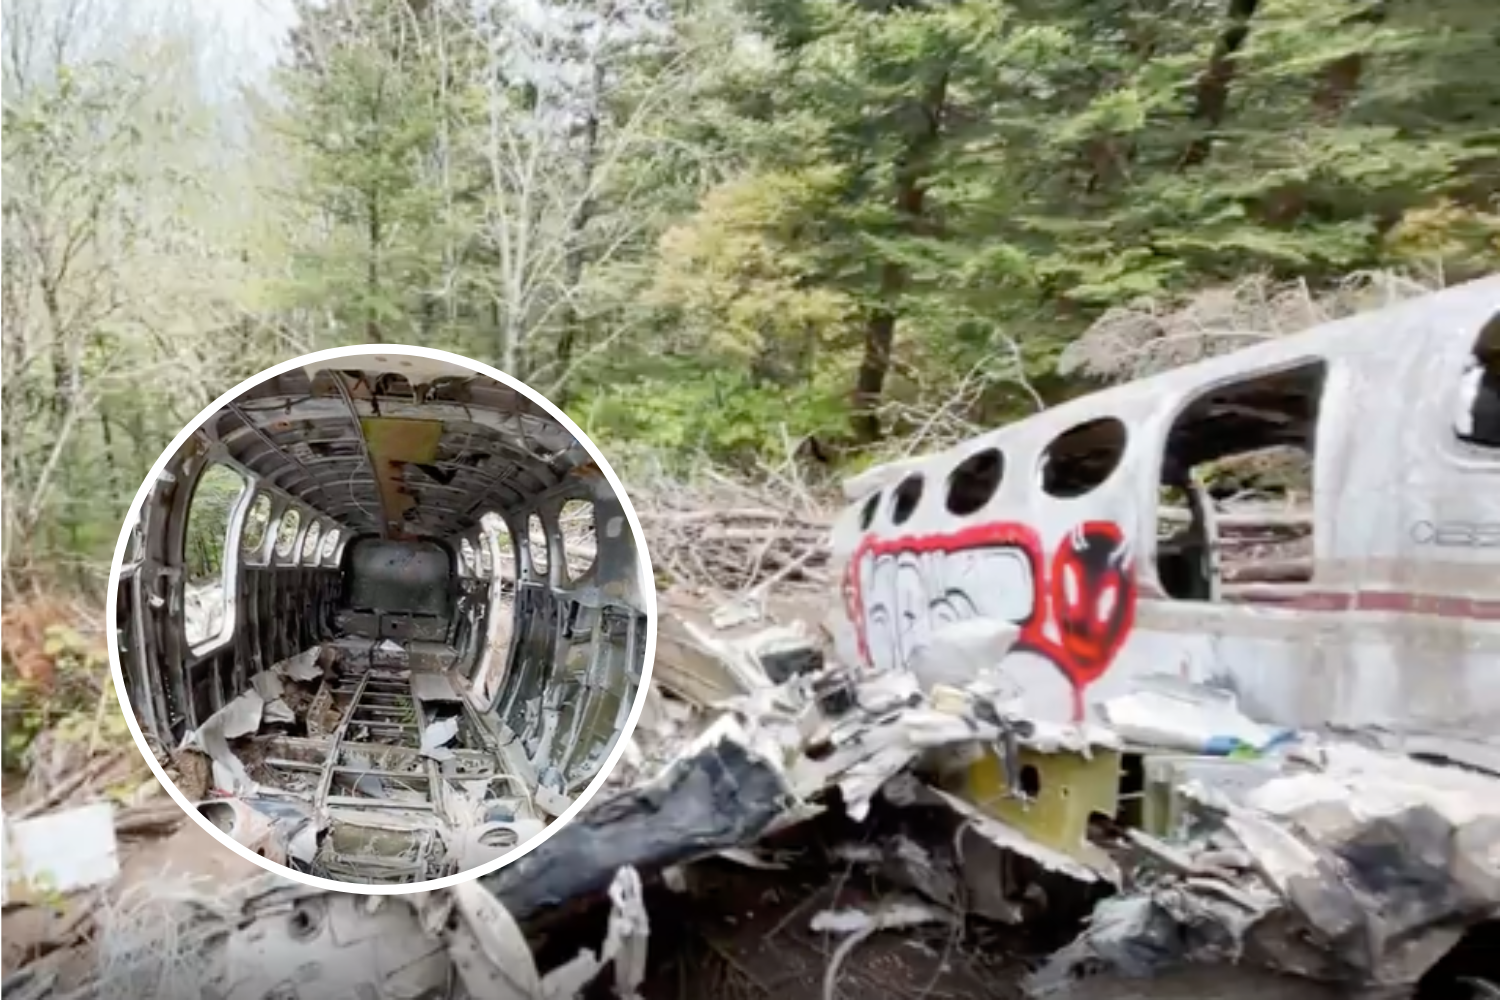 Video shows eerily preserved plane crash site in North Carolina: “Surreal”